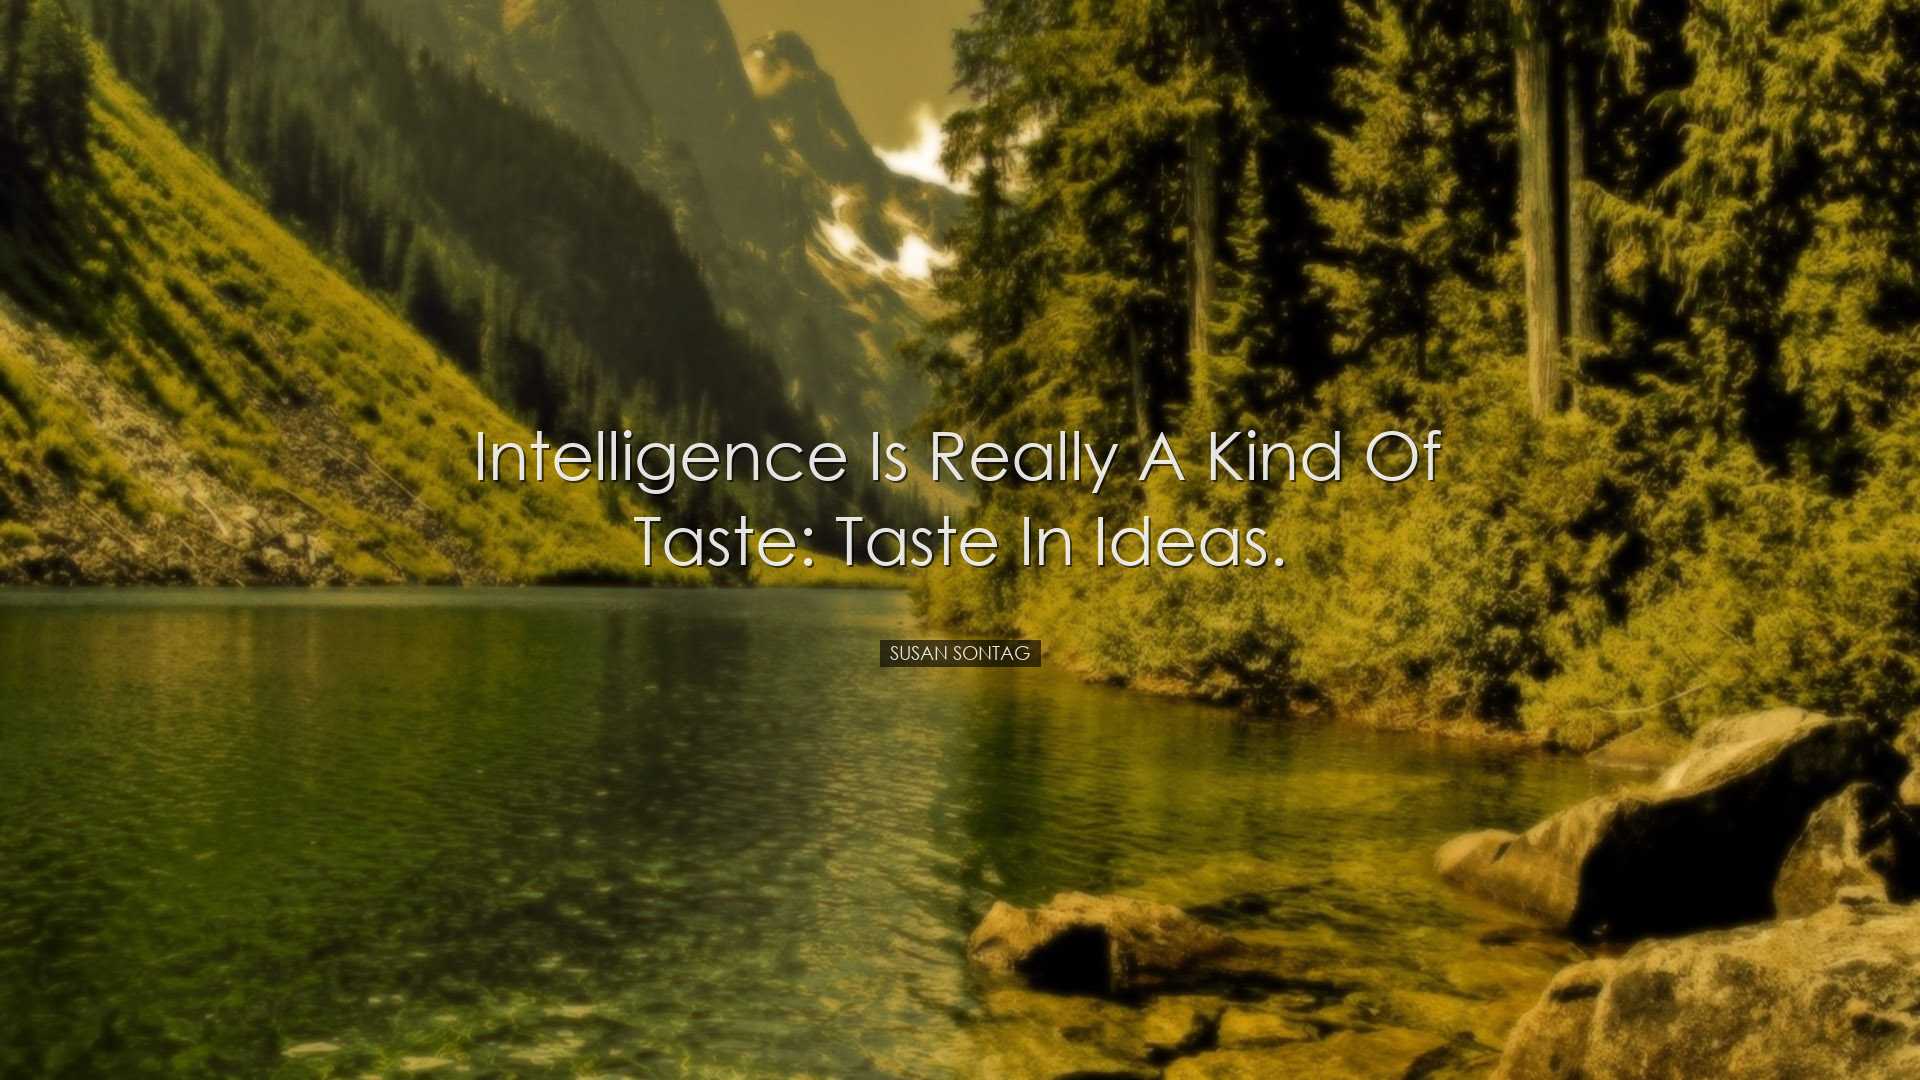 Intelligence is really a kind of taste: taste in ideas. - Susan So